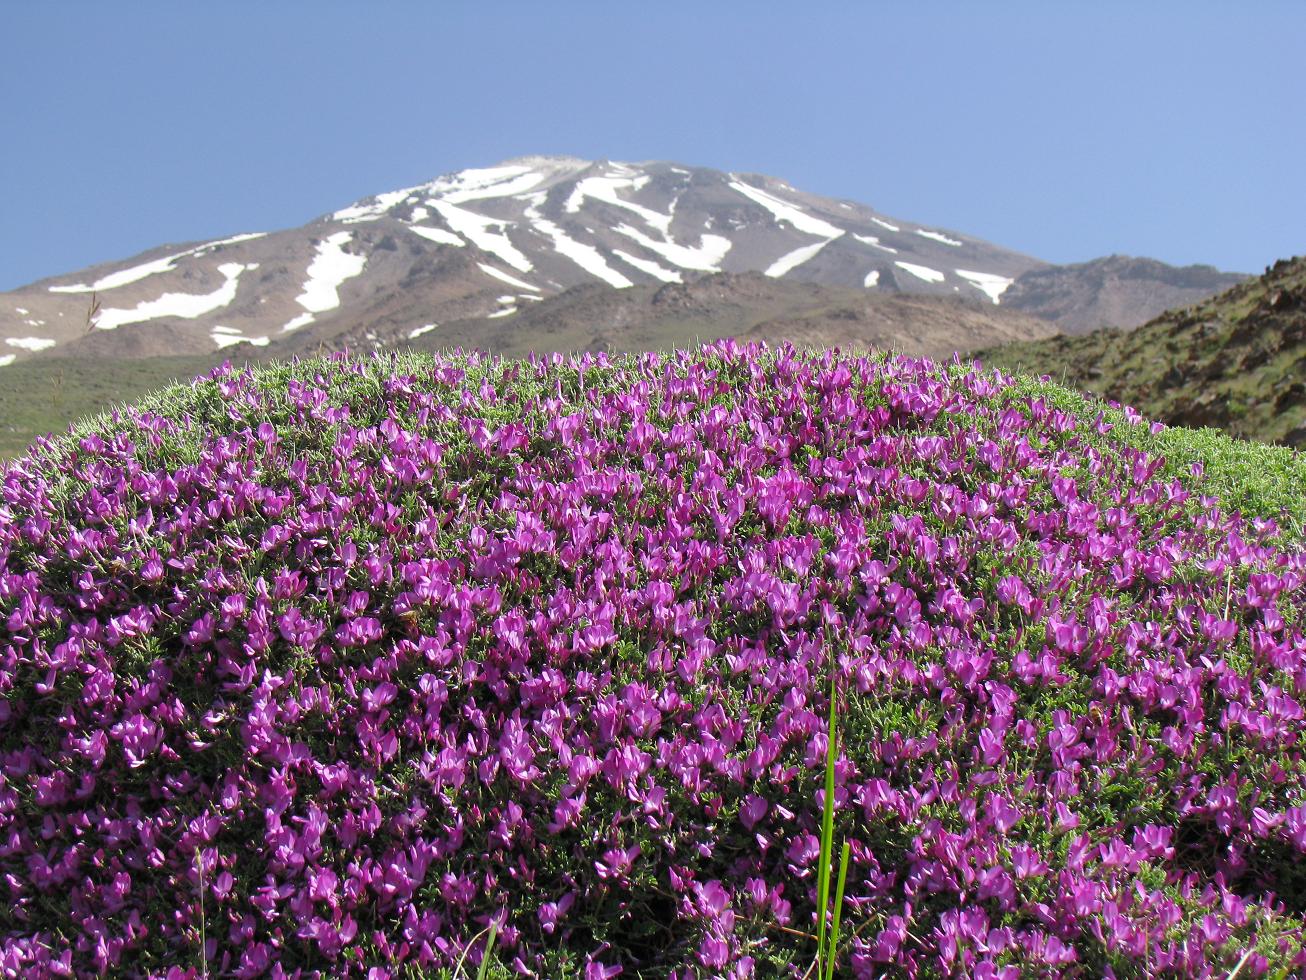 damavand on top, Mount Damavand